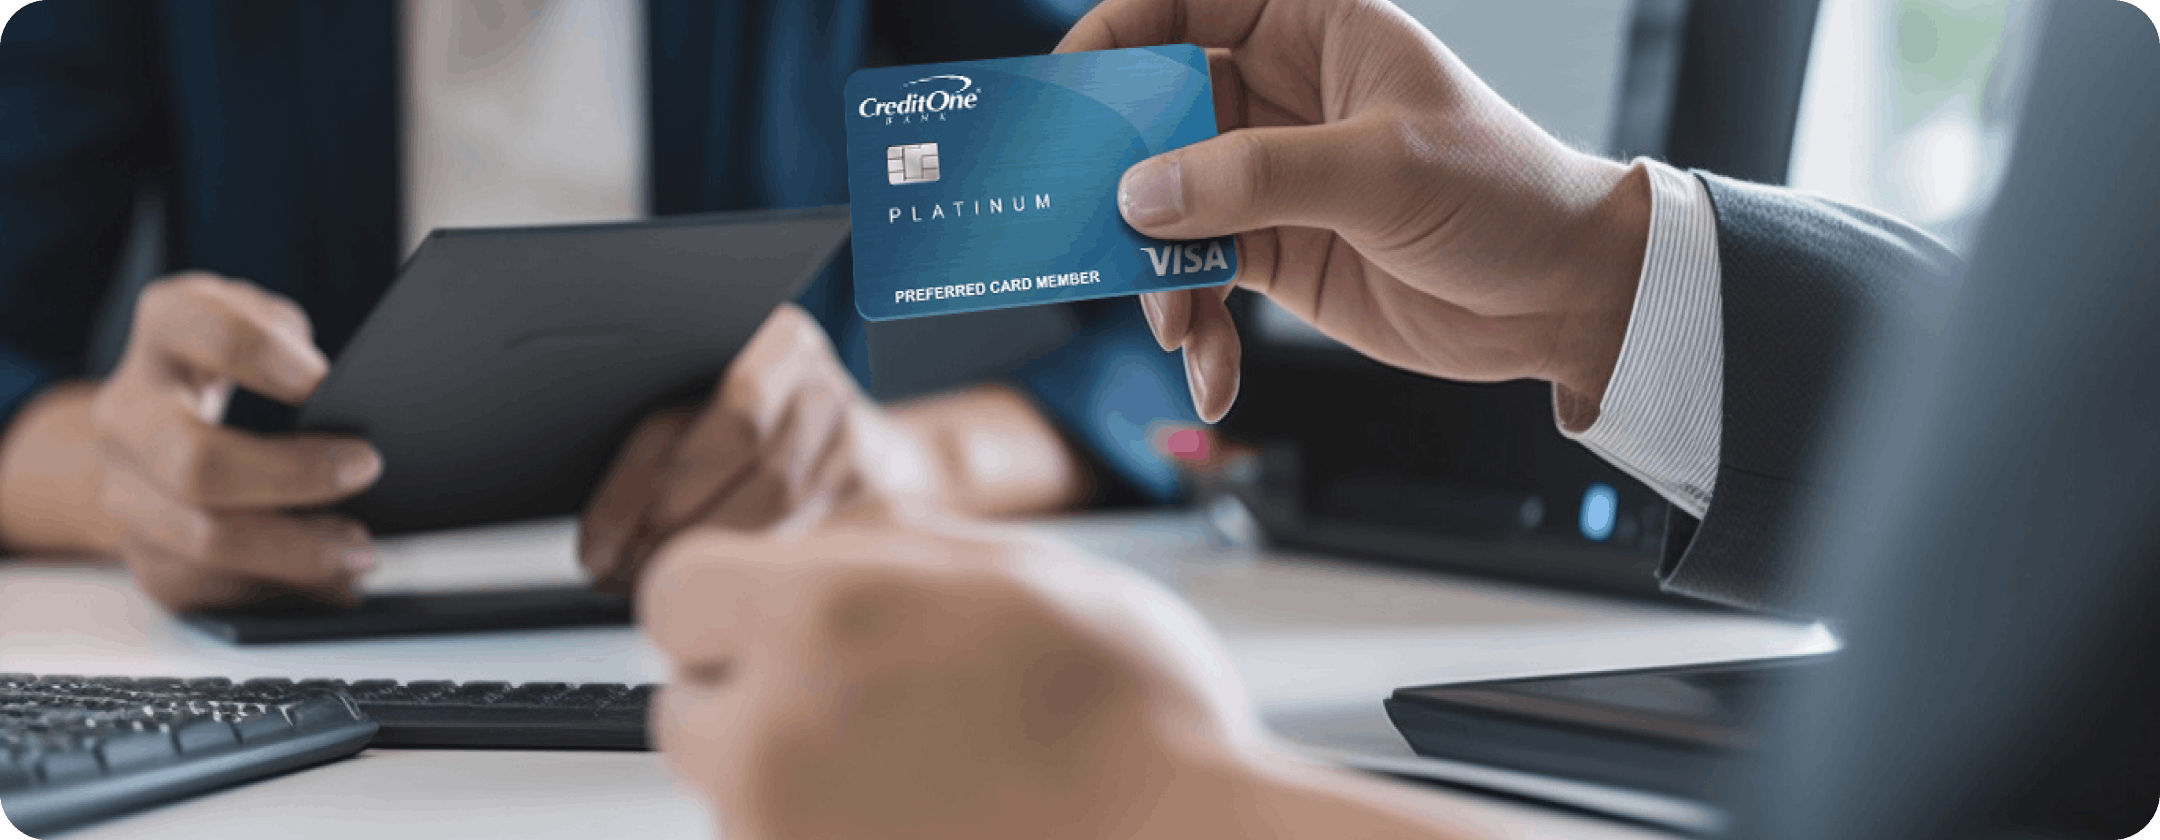 corporate credit card 